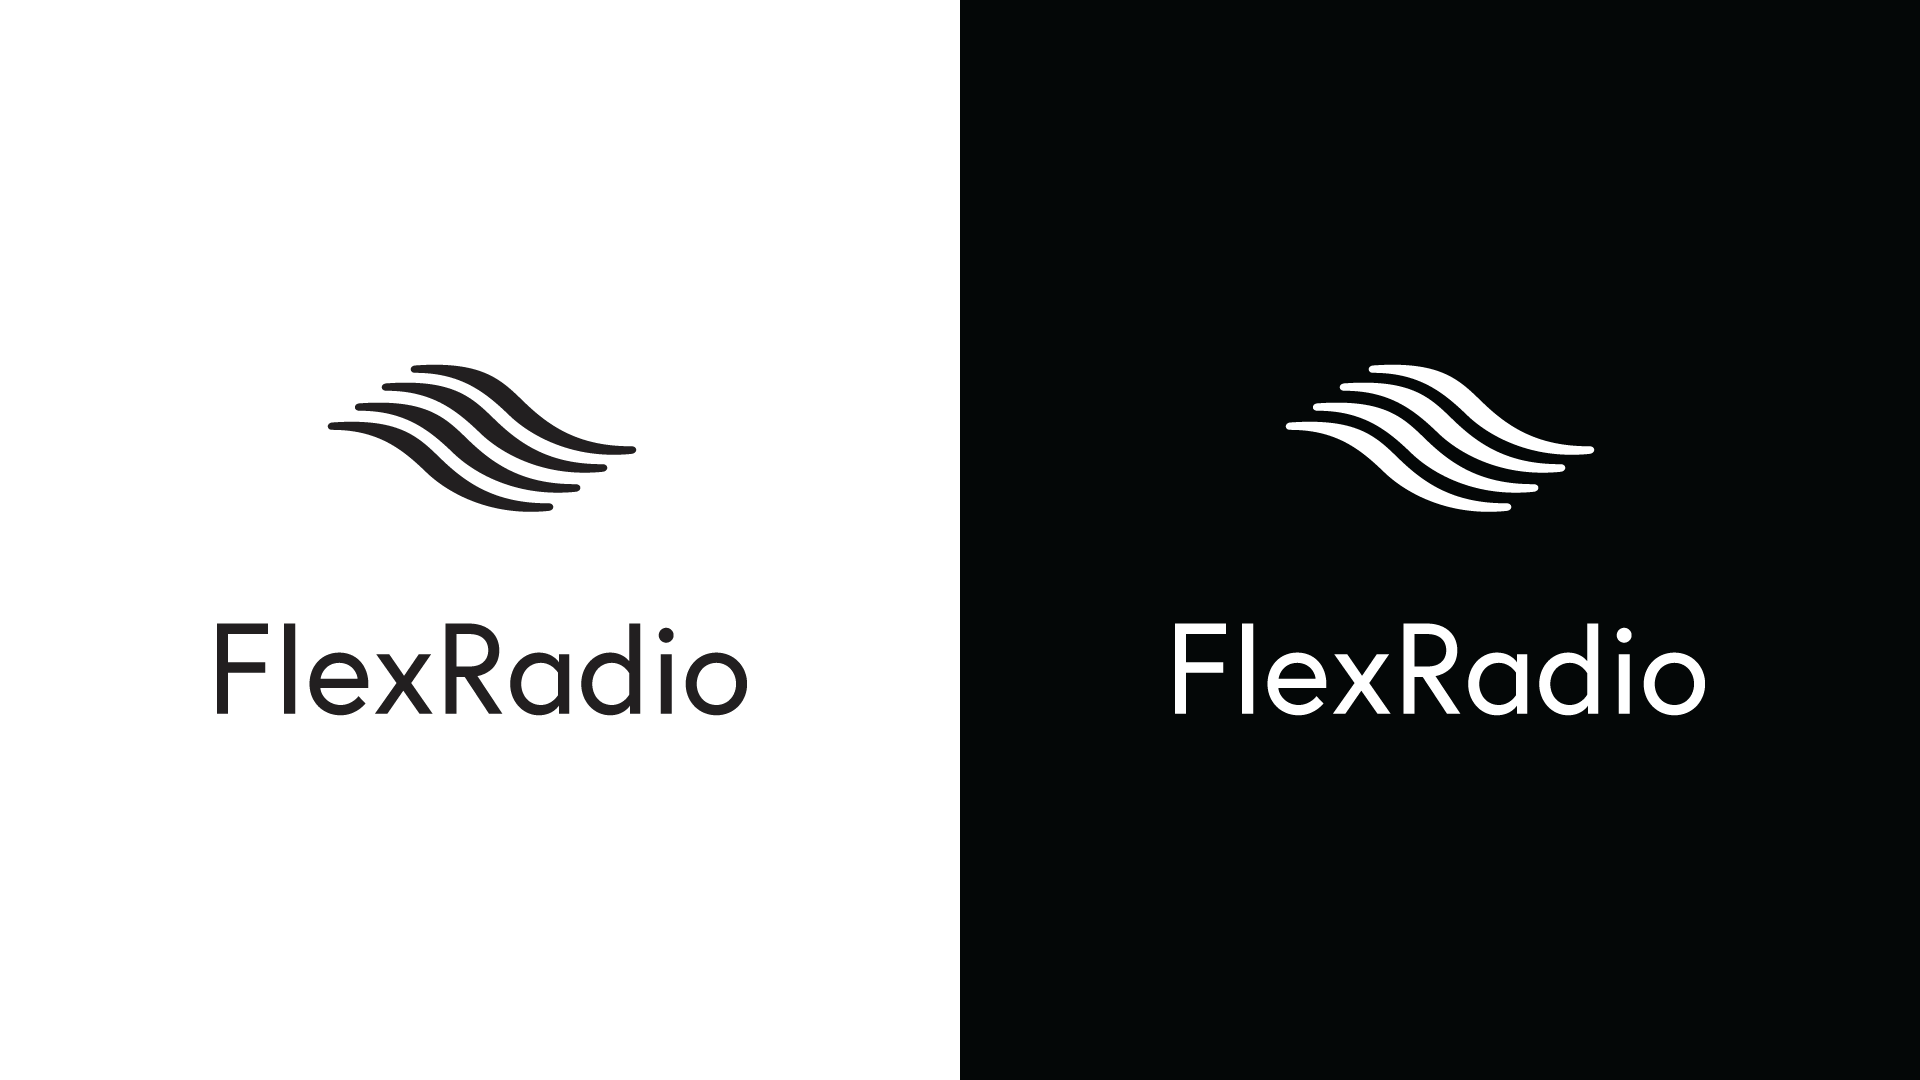 flexradio rumlogng